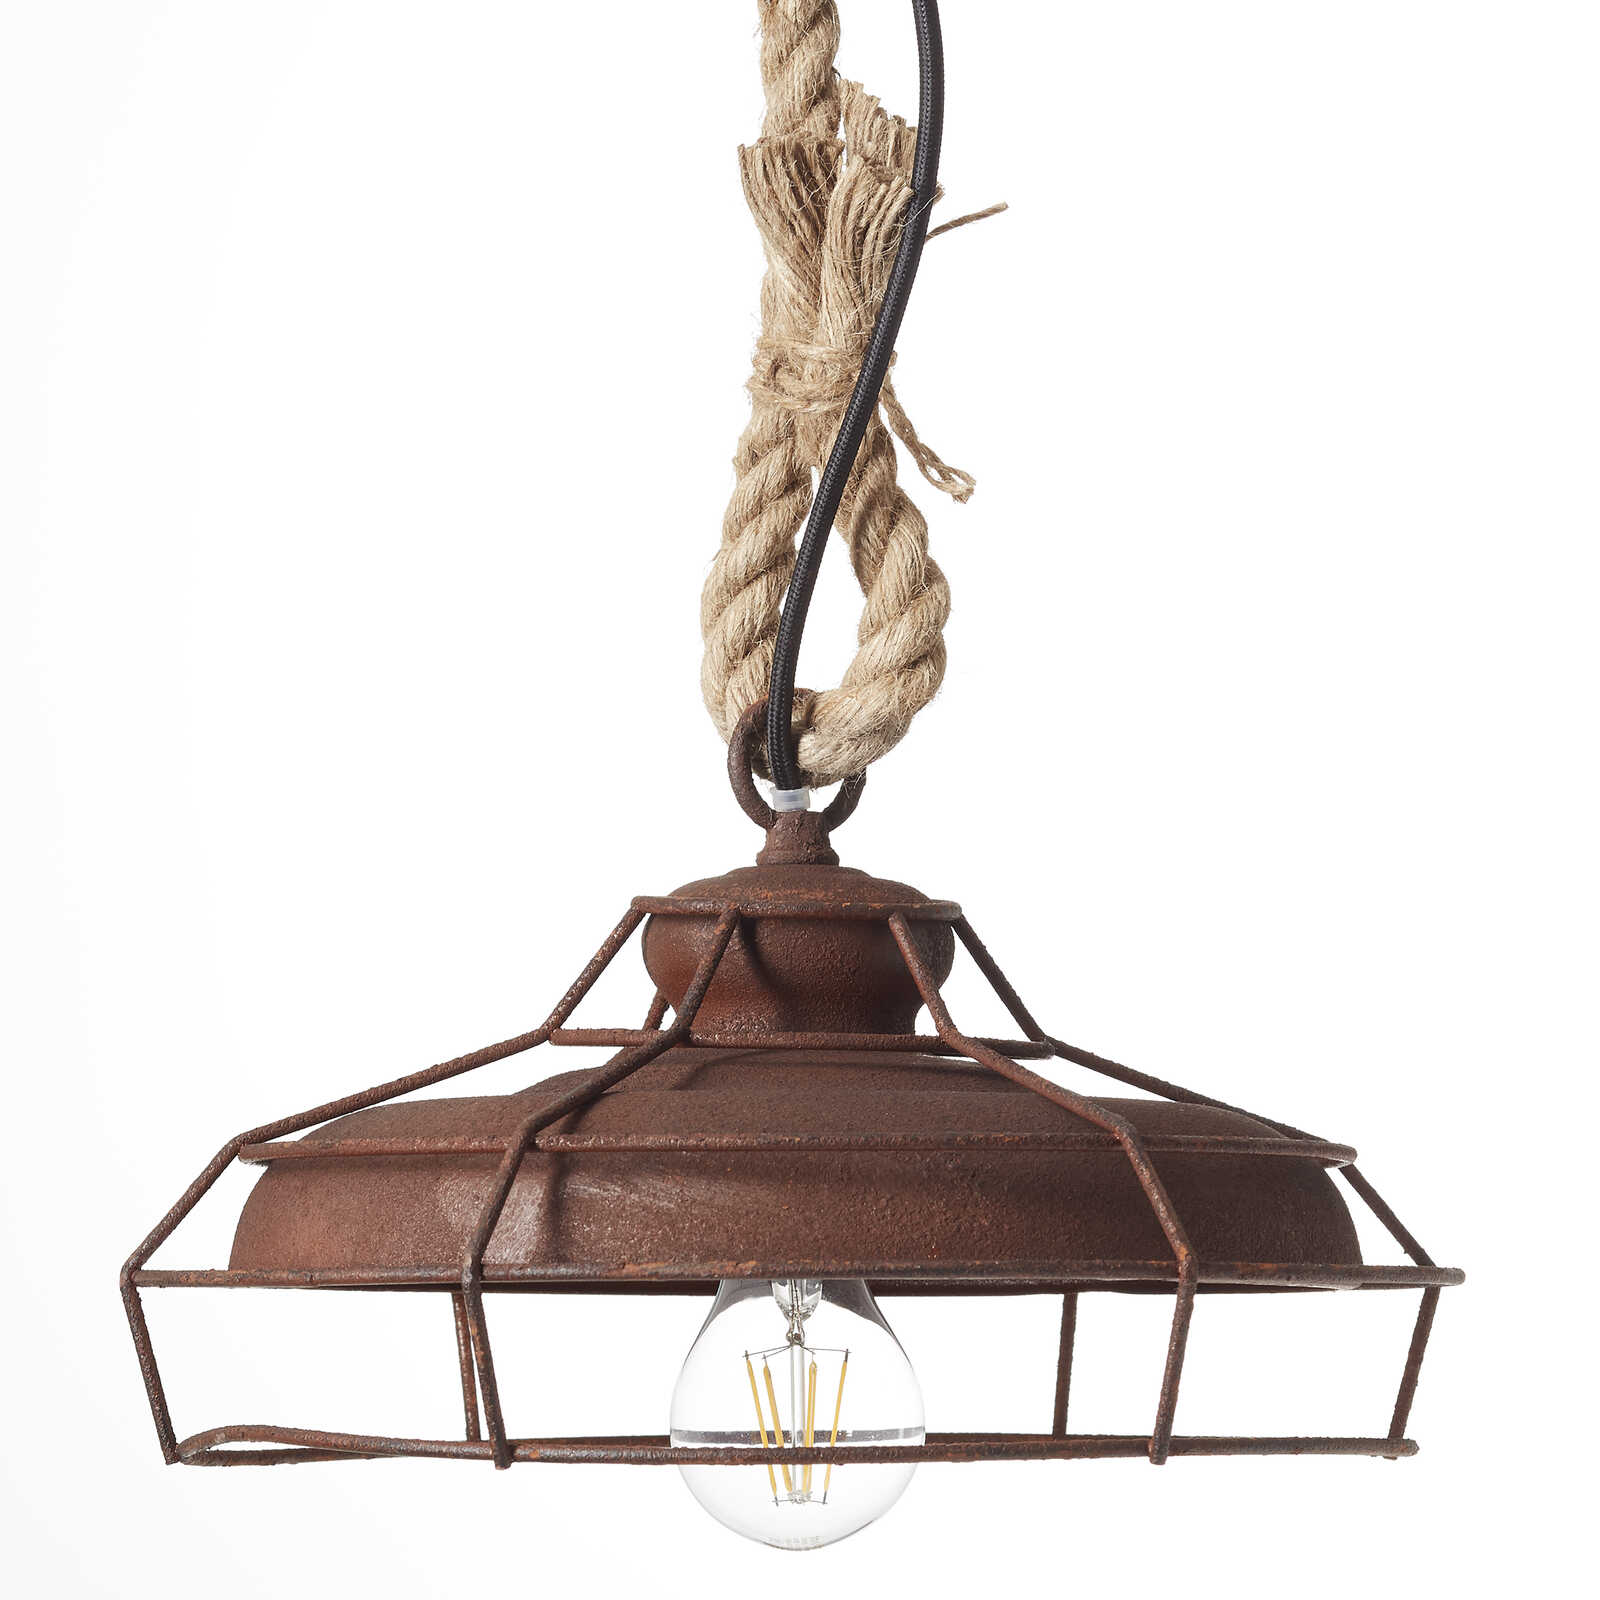             Metalen hanglamp - Malina - Bruin
        